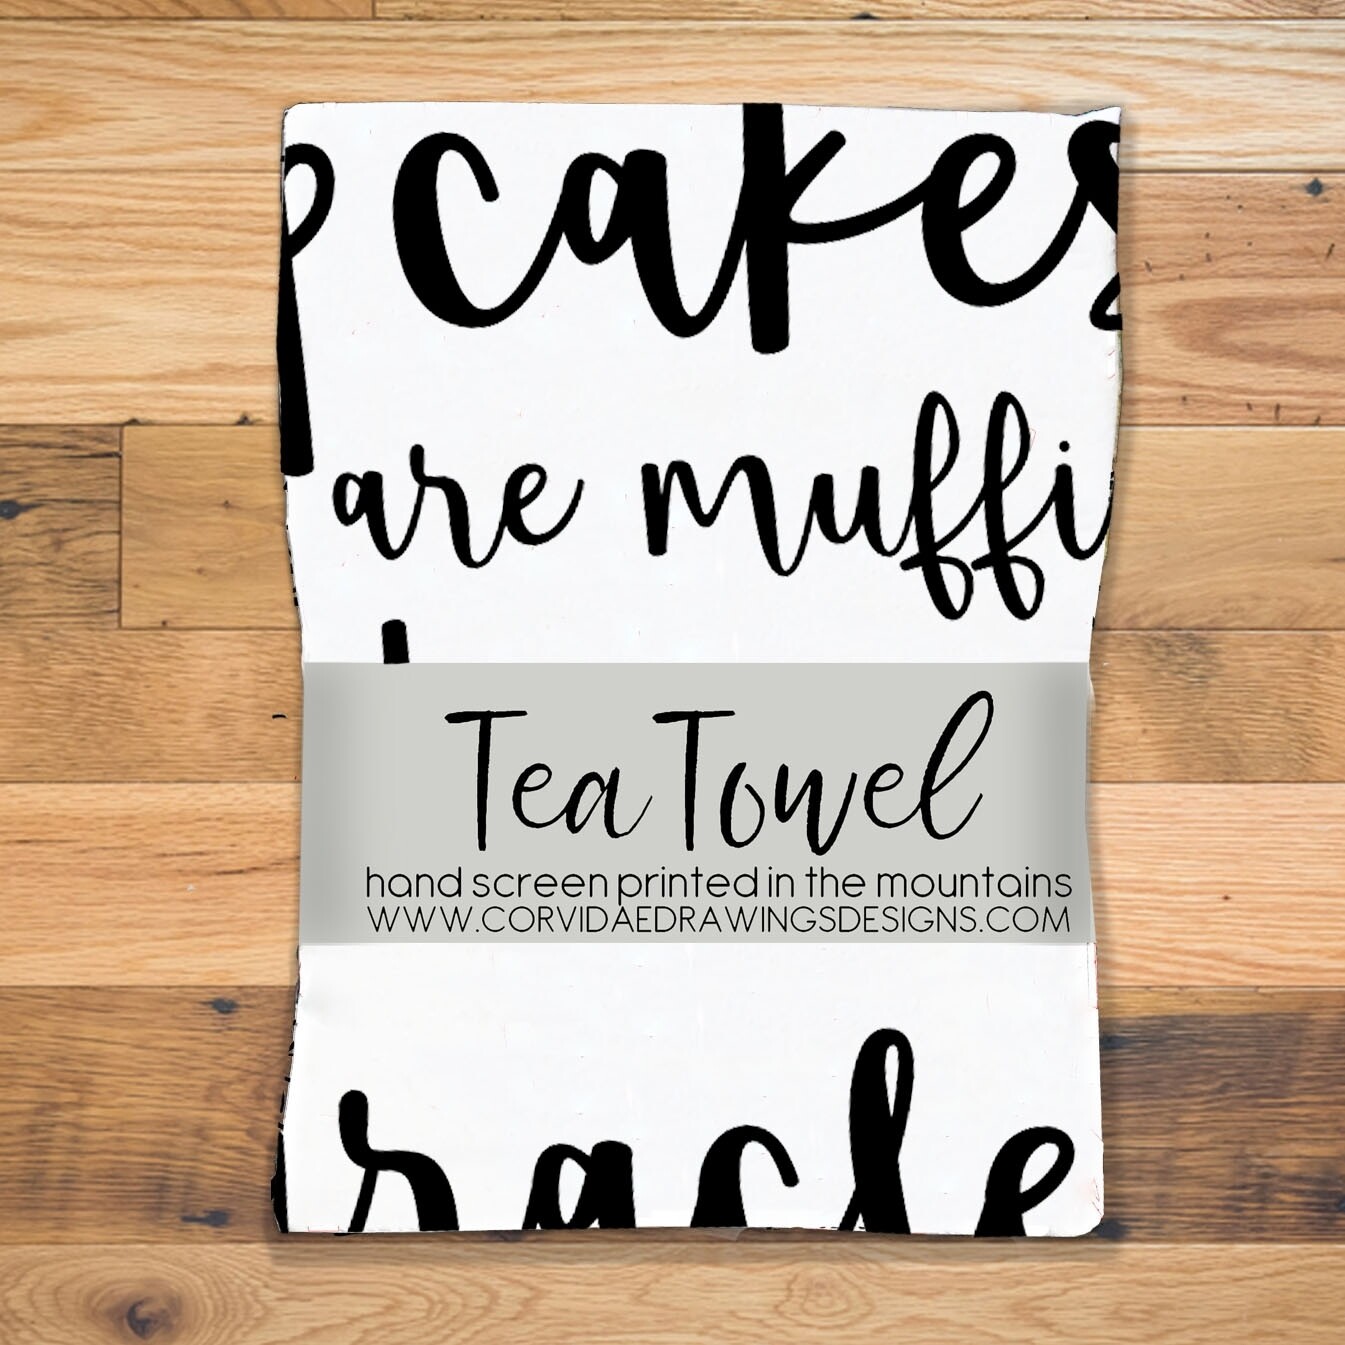 Tea Towel - Corvidae Cupcakes are Muffins